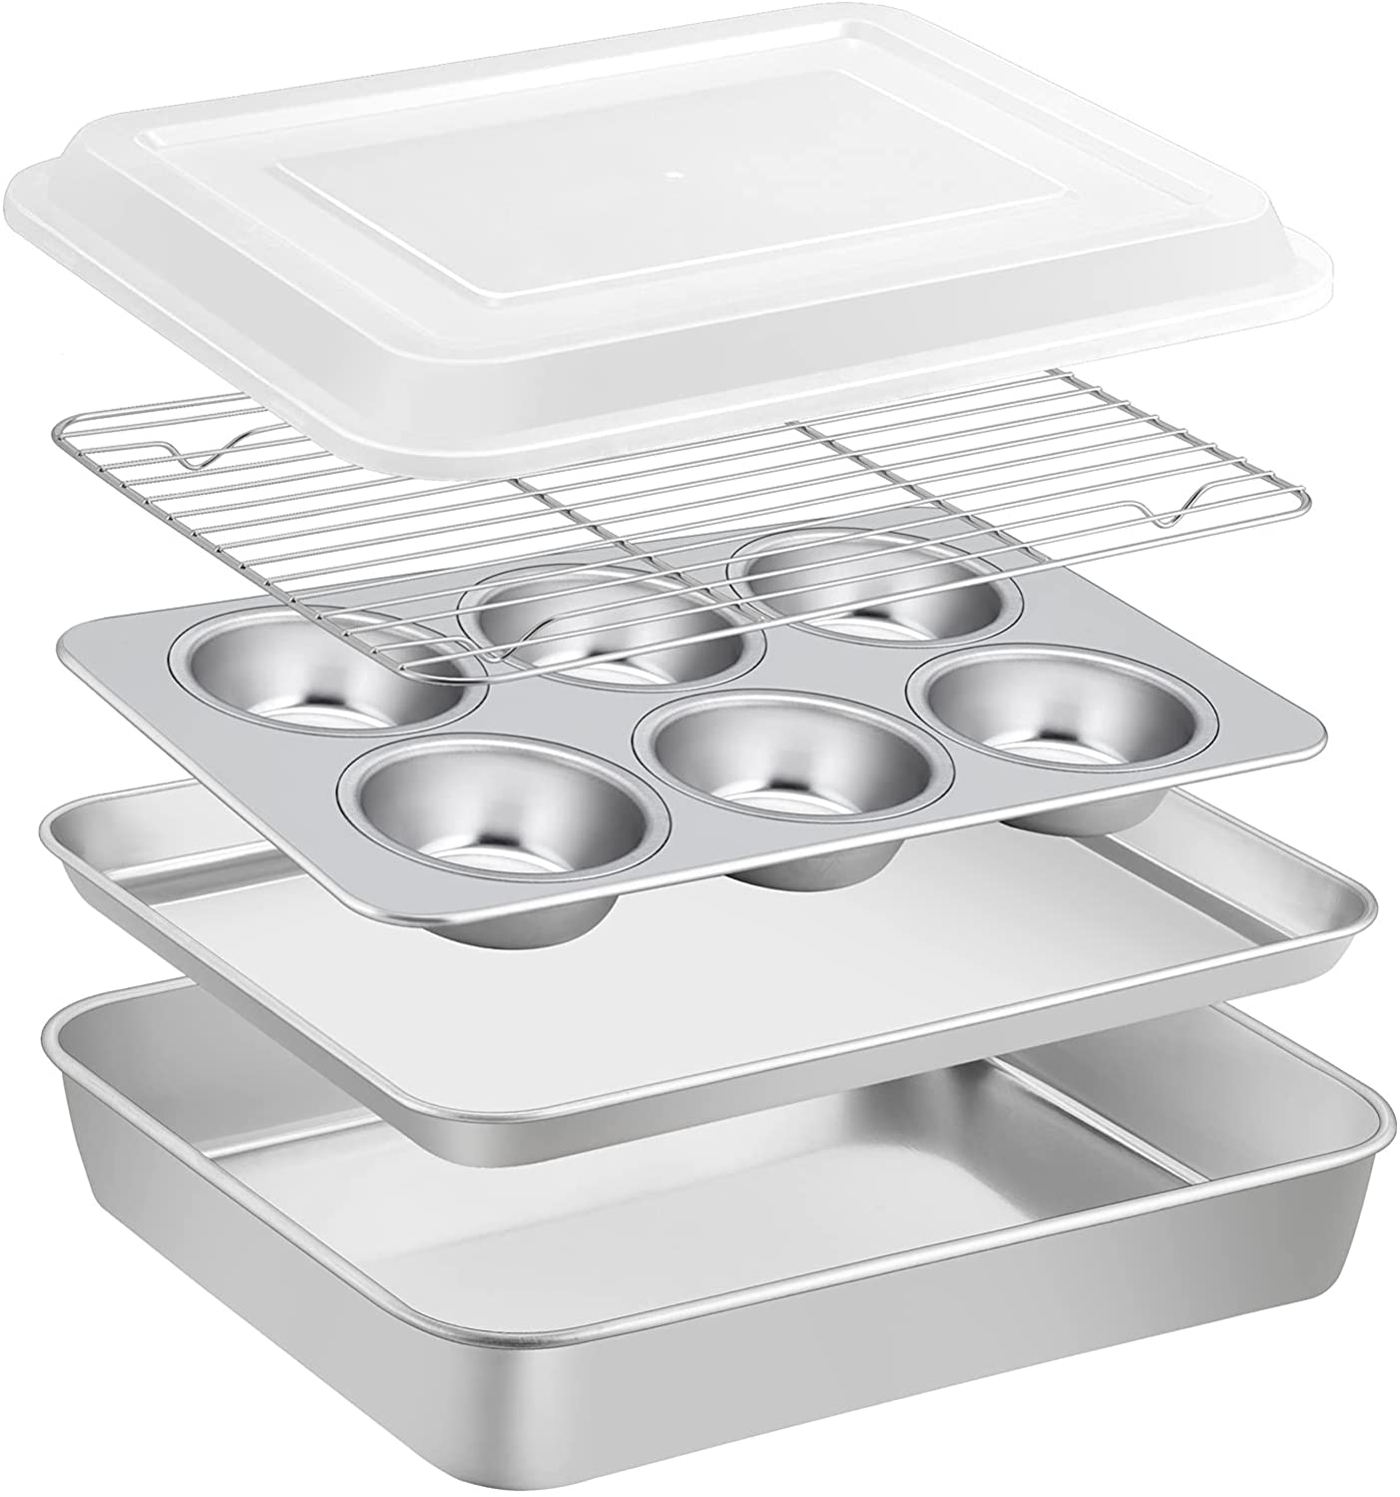 Stainless Steel Bakeware Set of 5 or 8, Baking Roasting Toaster Oven Pans, Lasagna/Square/Round Cake Pan, Loaf Pan & Muffin Pan, Non-Toxic & Durable